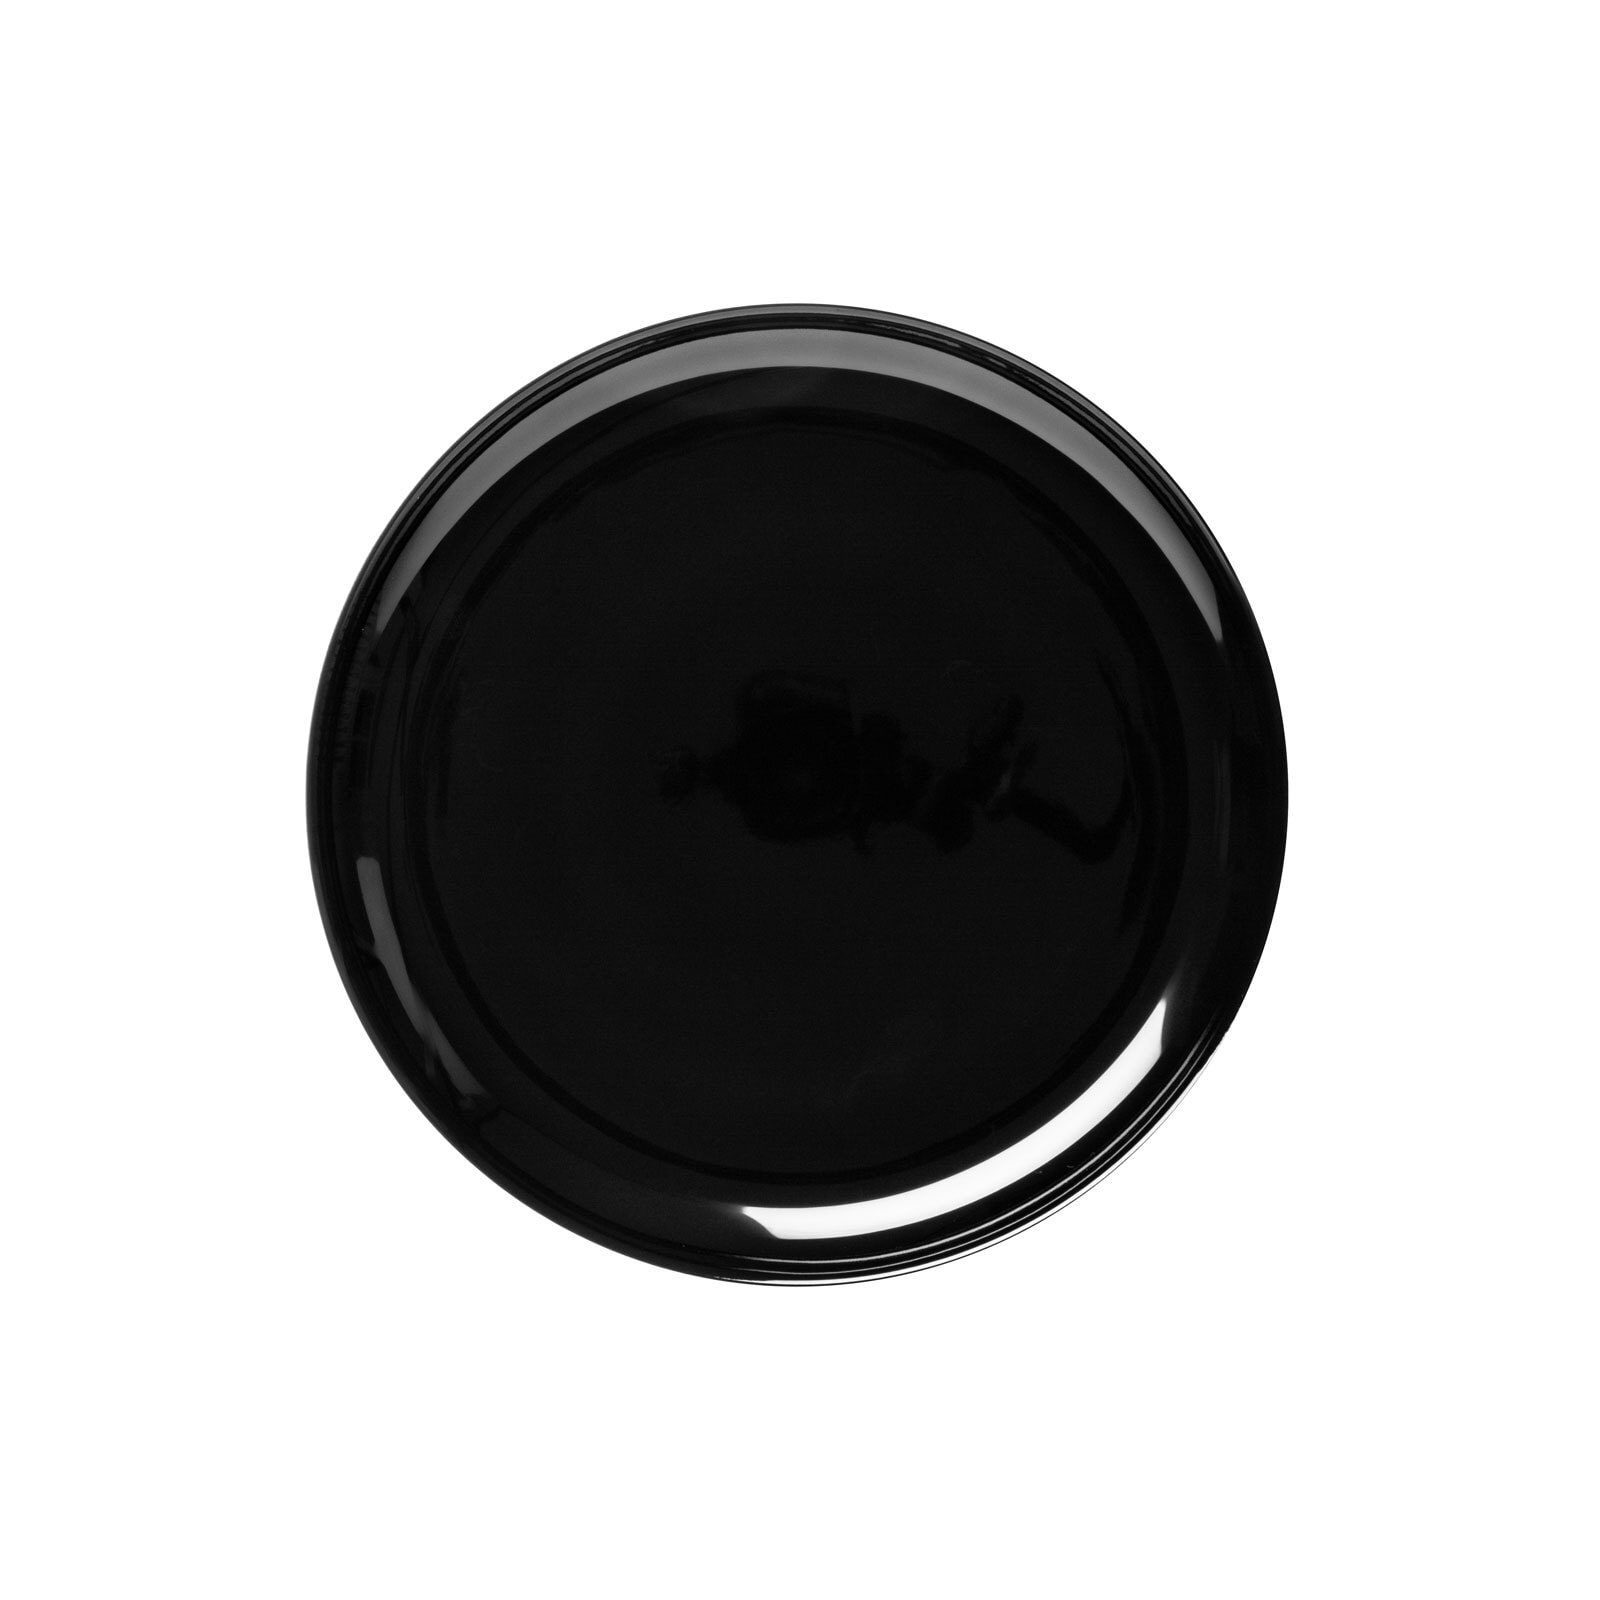 Seltmann Weiden Kaffeeservice LIDO SOLID BLACK 18-teilig schwarz/ weiß